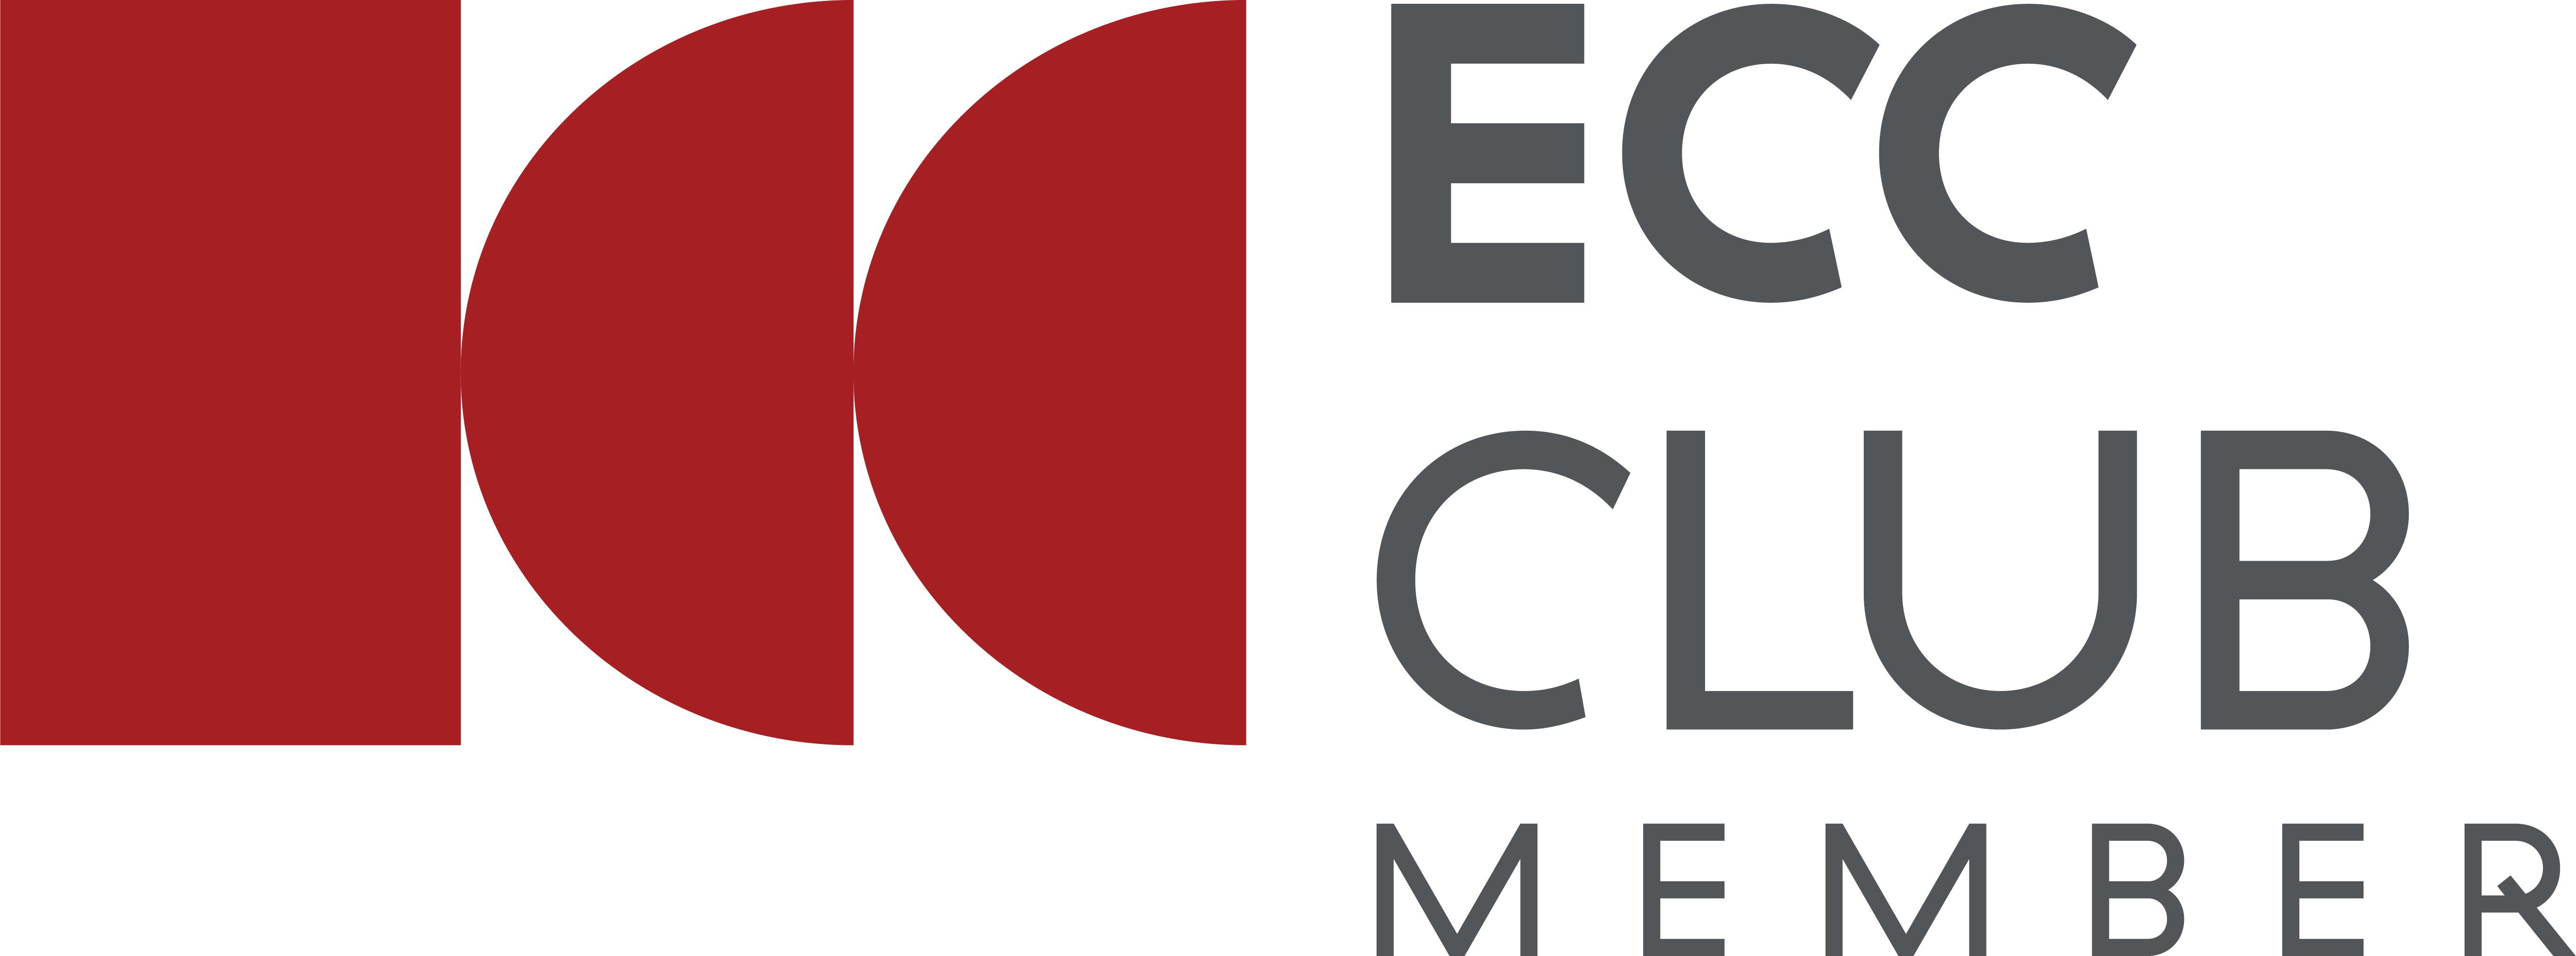 ECC Club Cologne